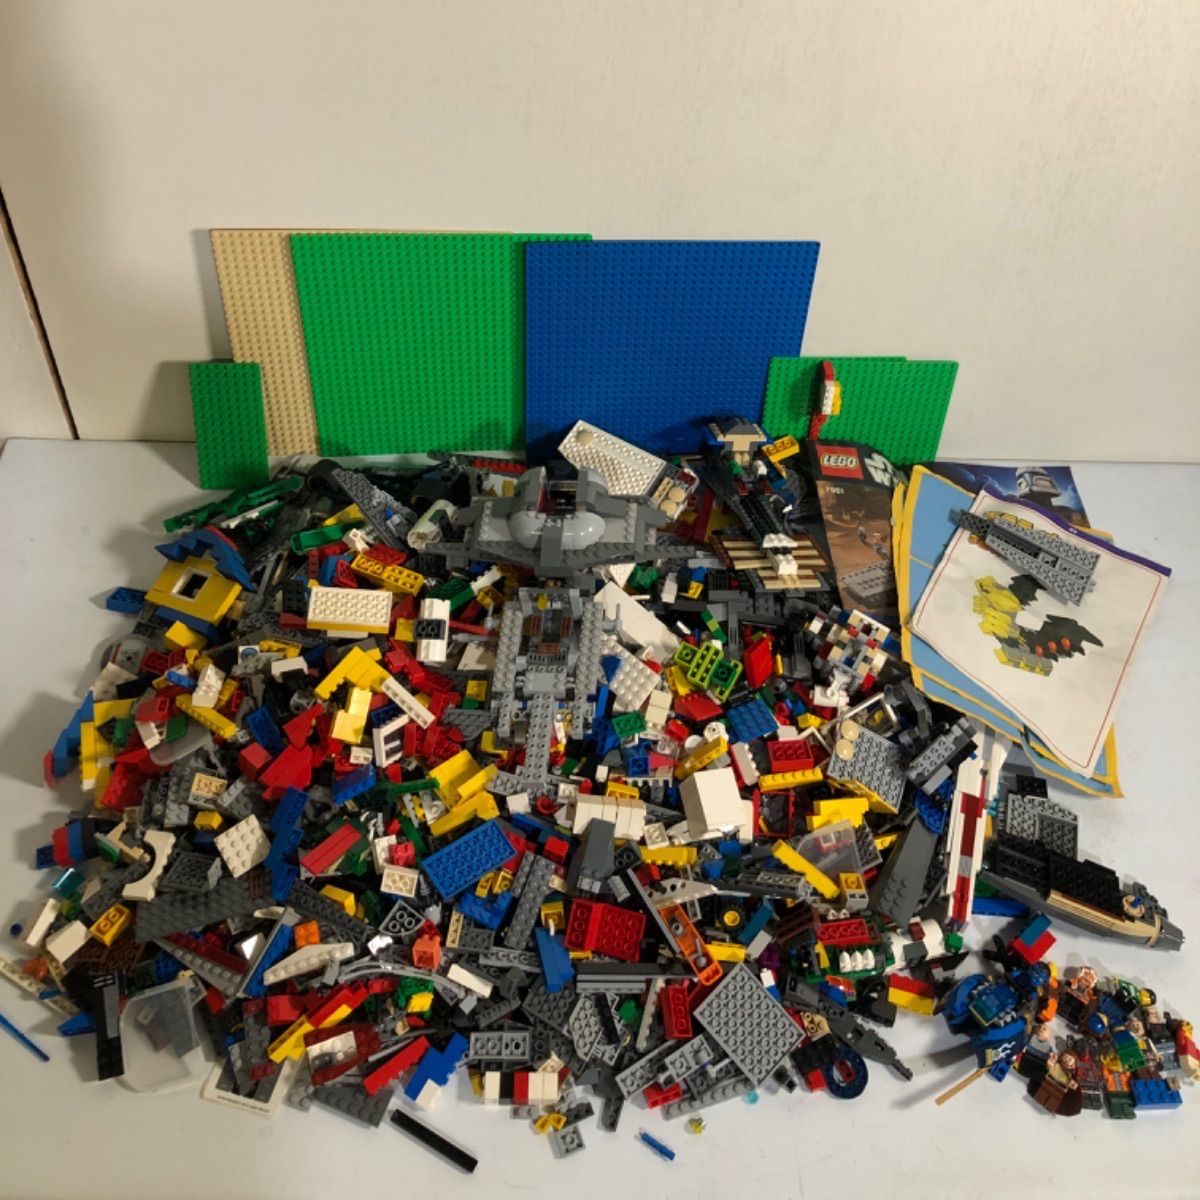 ☆ LEGO レゴ パーツ 約5.3kg 大量 まとめ売り 基礎板、人形含む